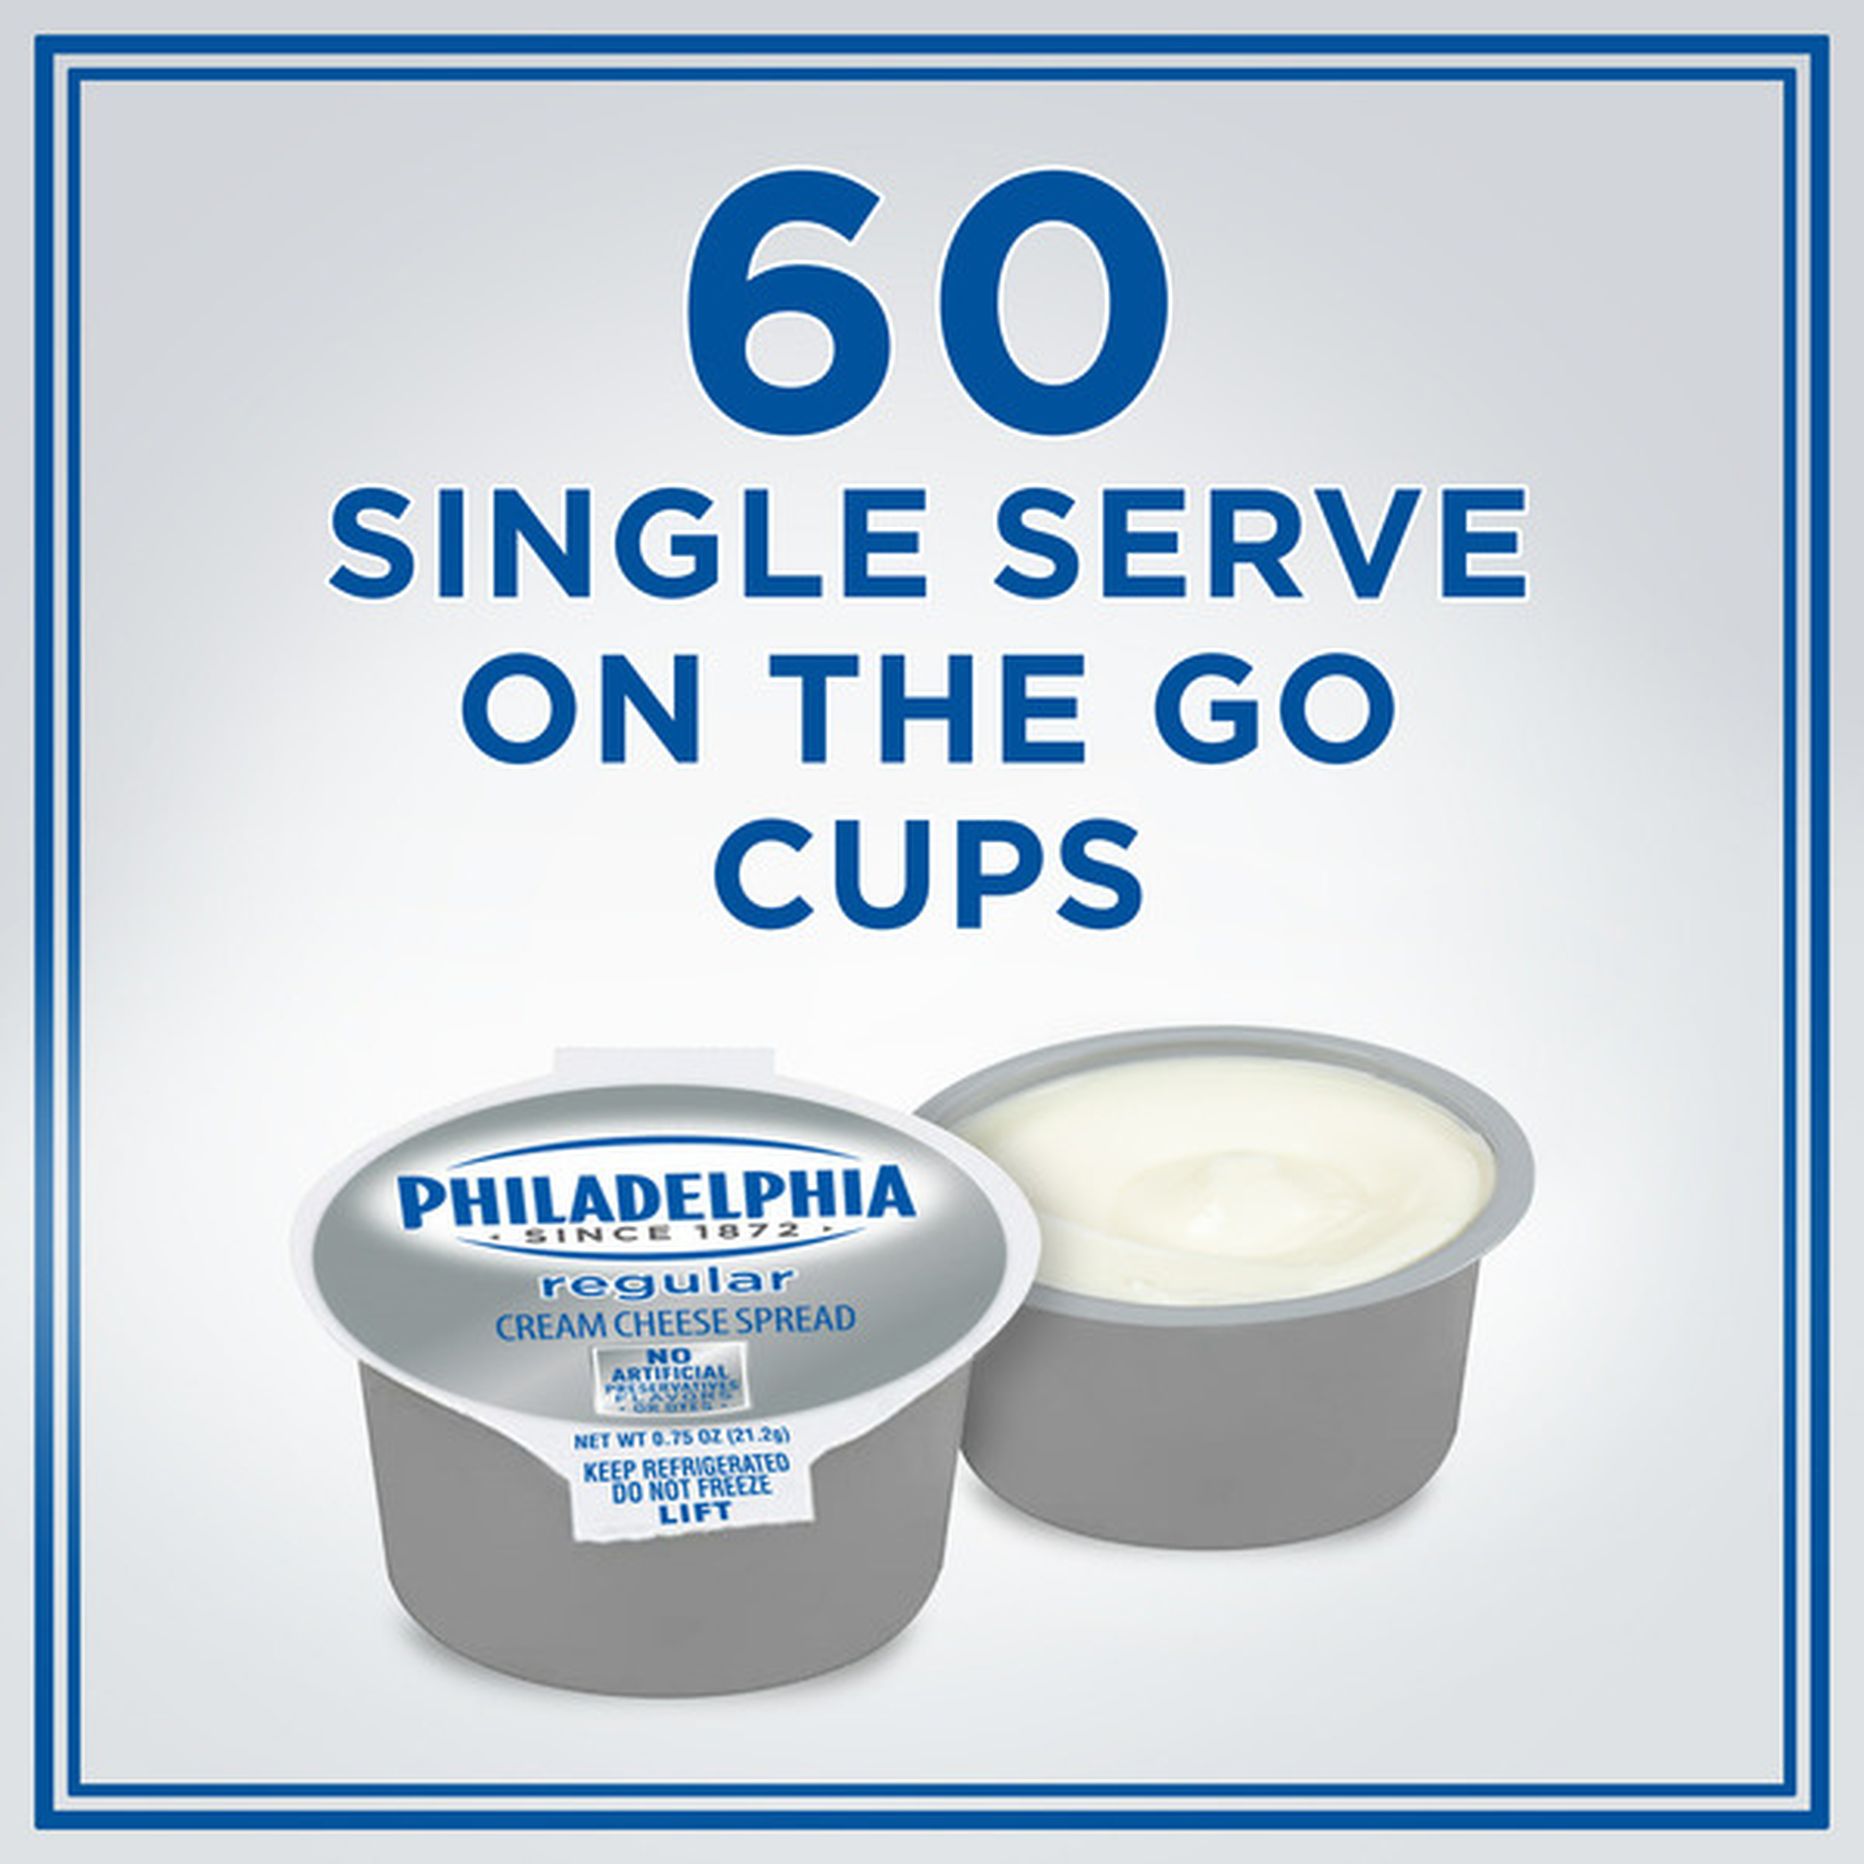 Philadelphia Original Single Serve Cream Cheese Spread (1 oz) Delivery